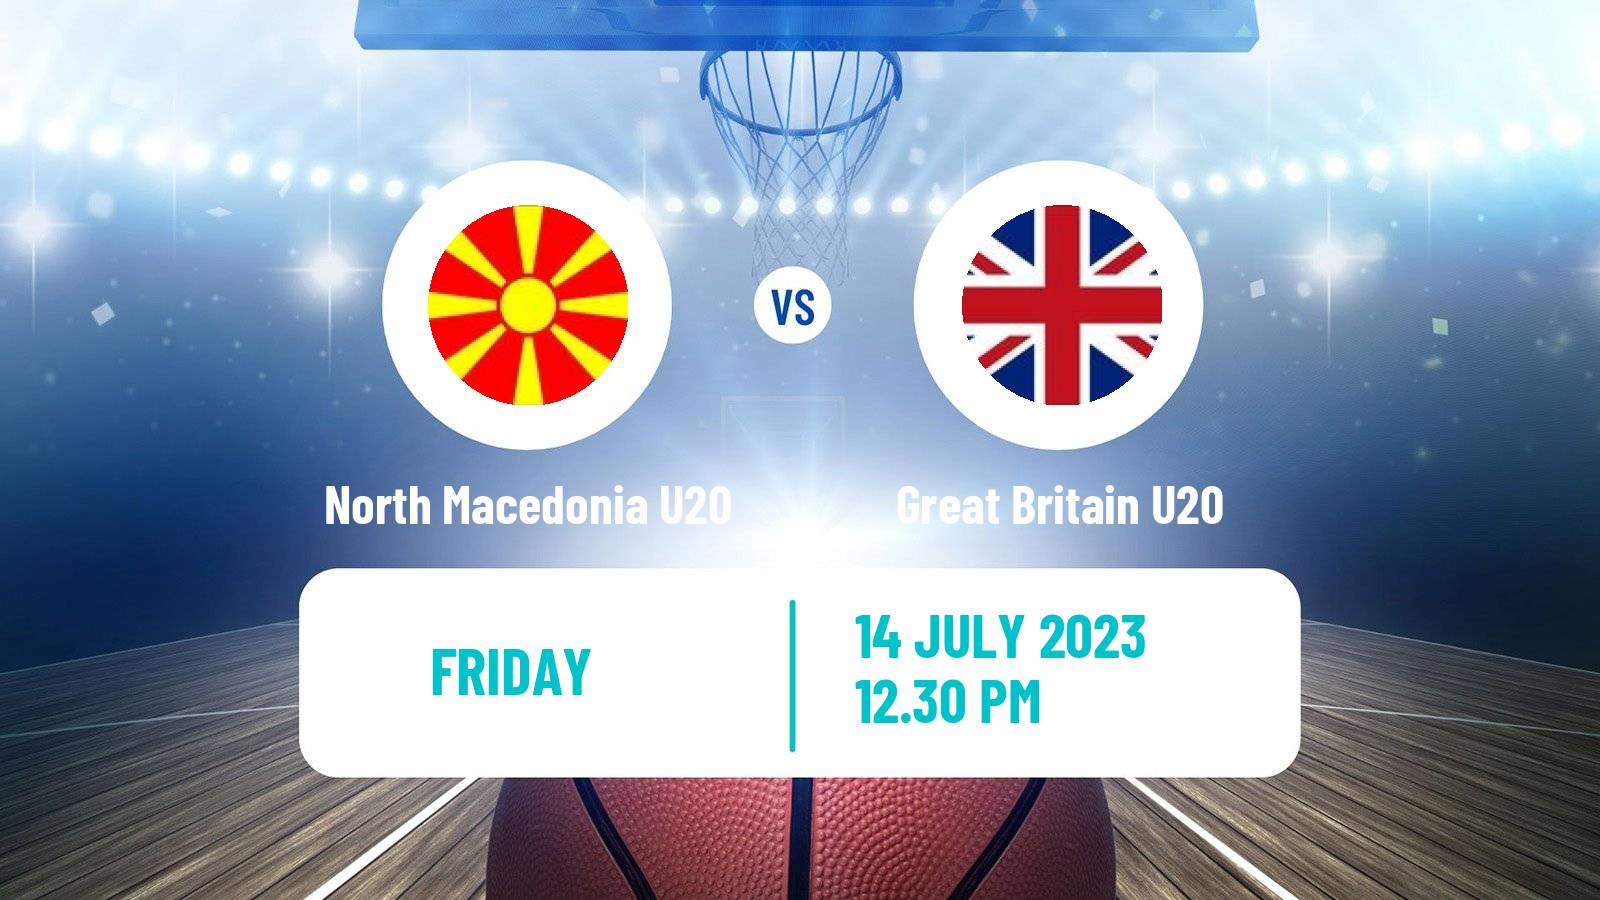 Basketball EuroBasket U20 B North Macedonia U20 - Great Britain U20